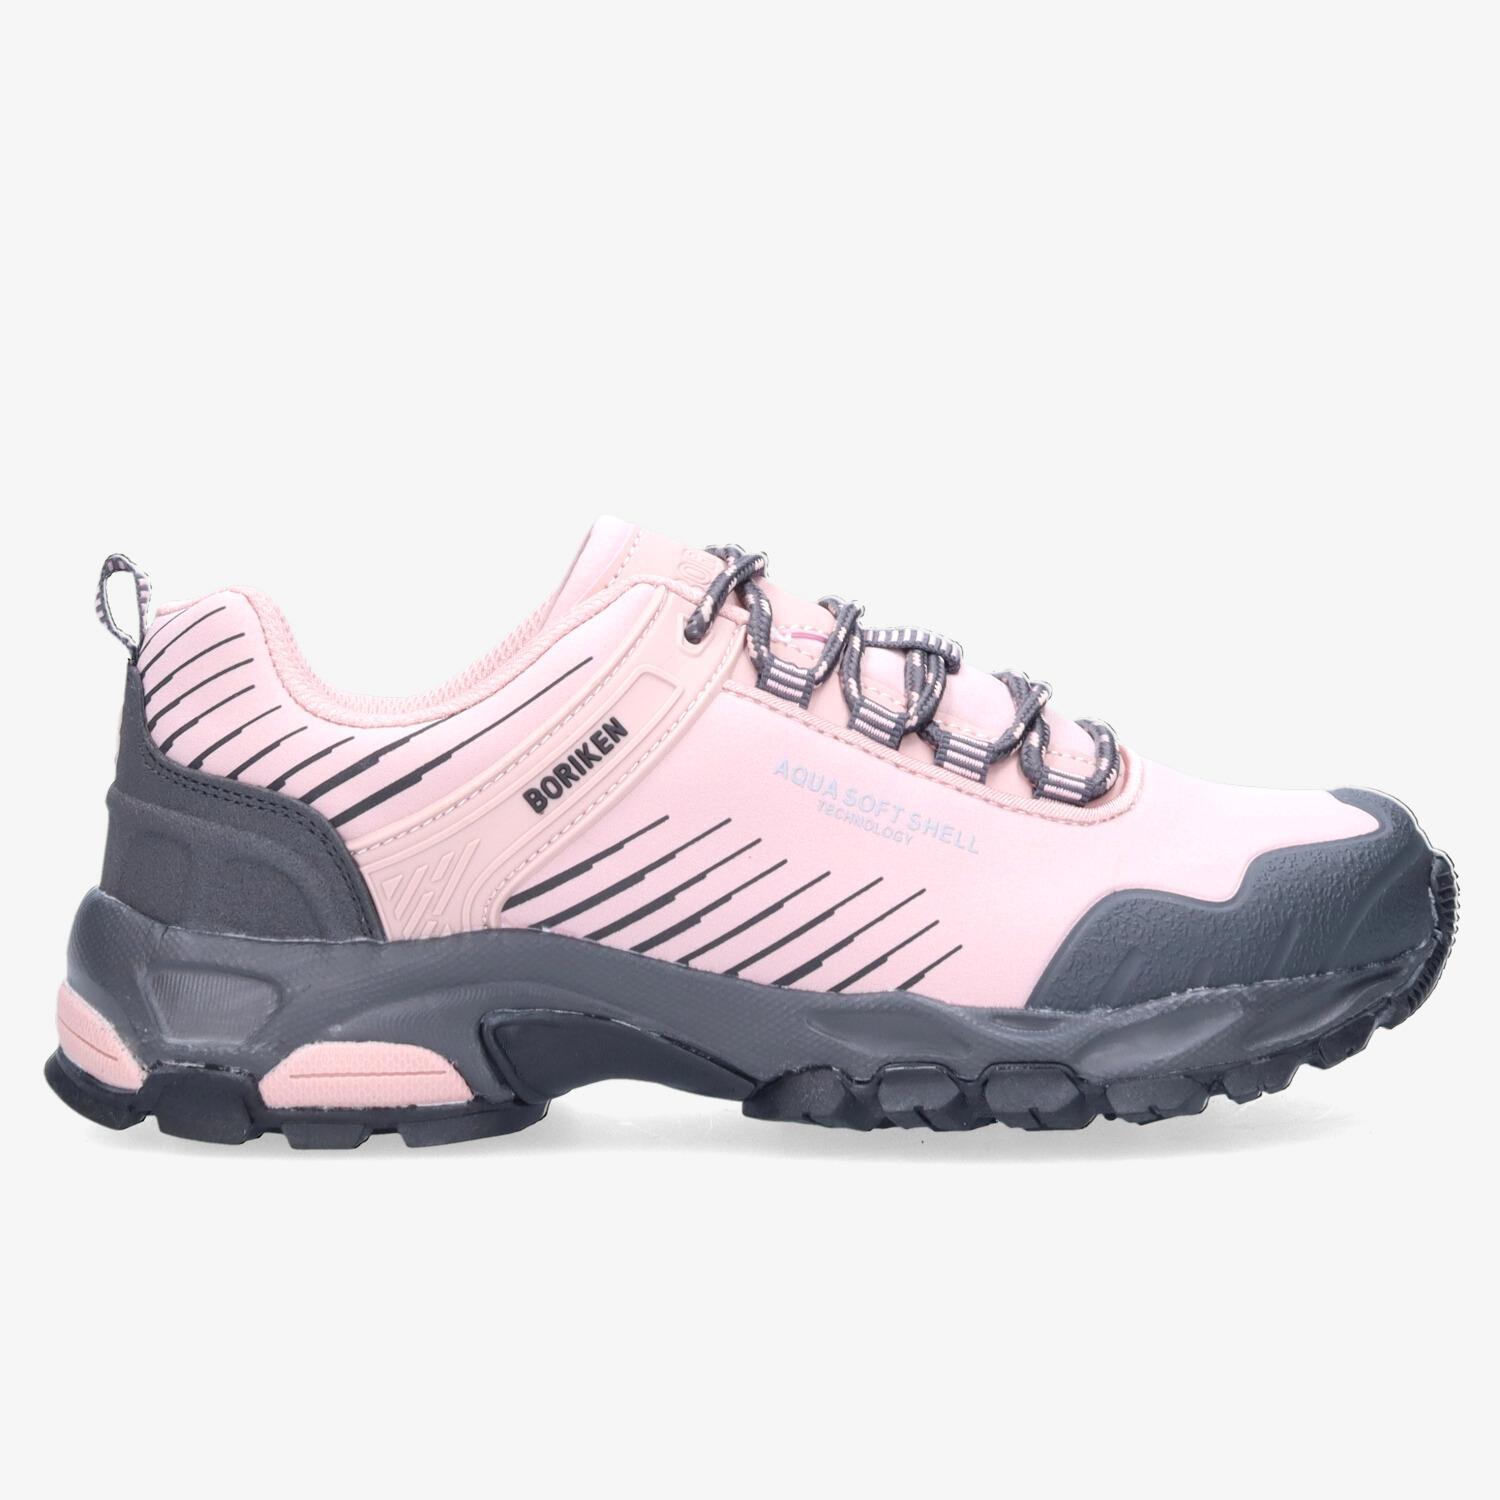 Boriken Barey-Rose-Chaussures de randonnée femme sports taille 40